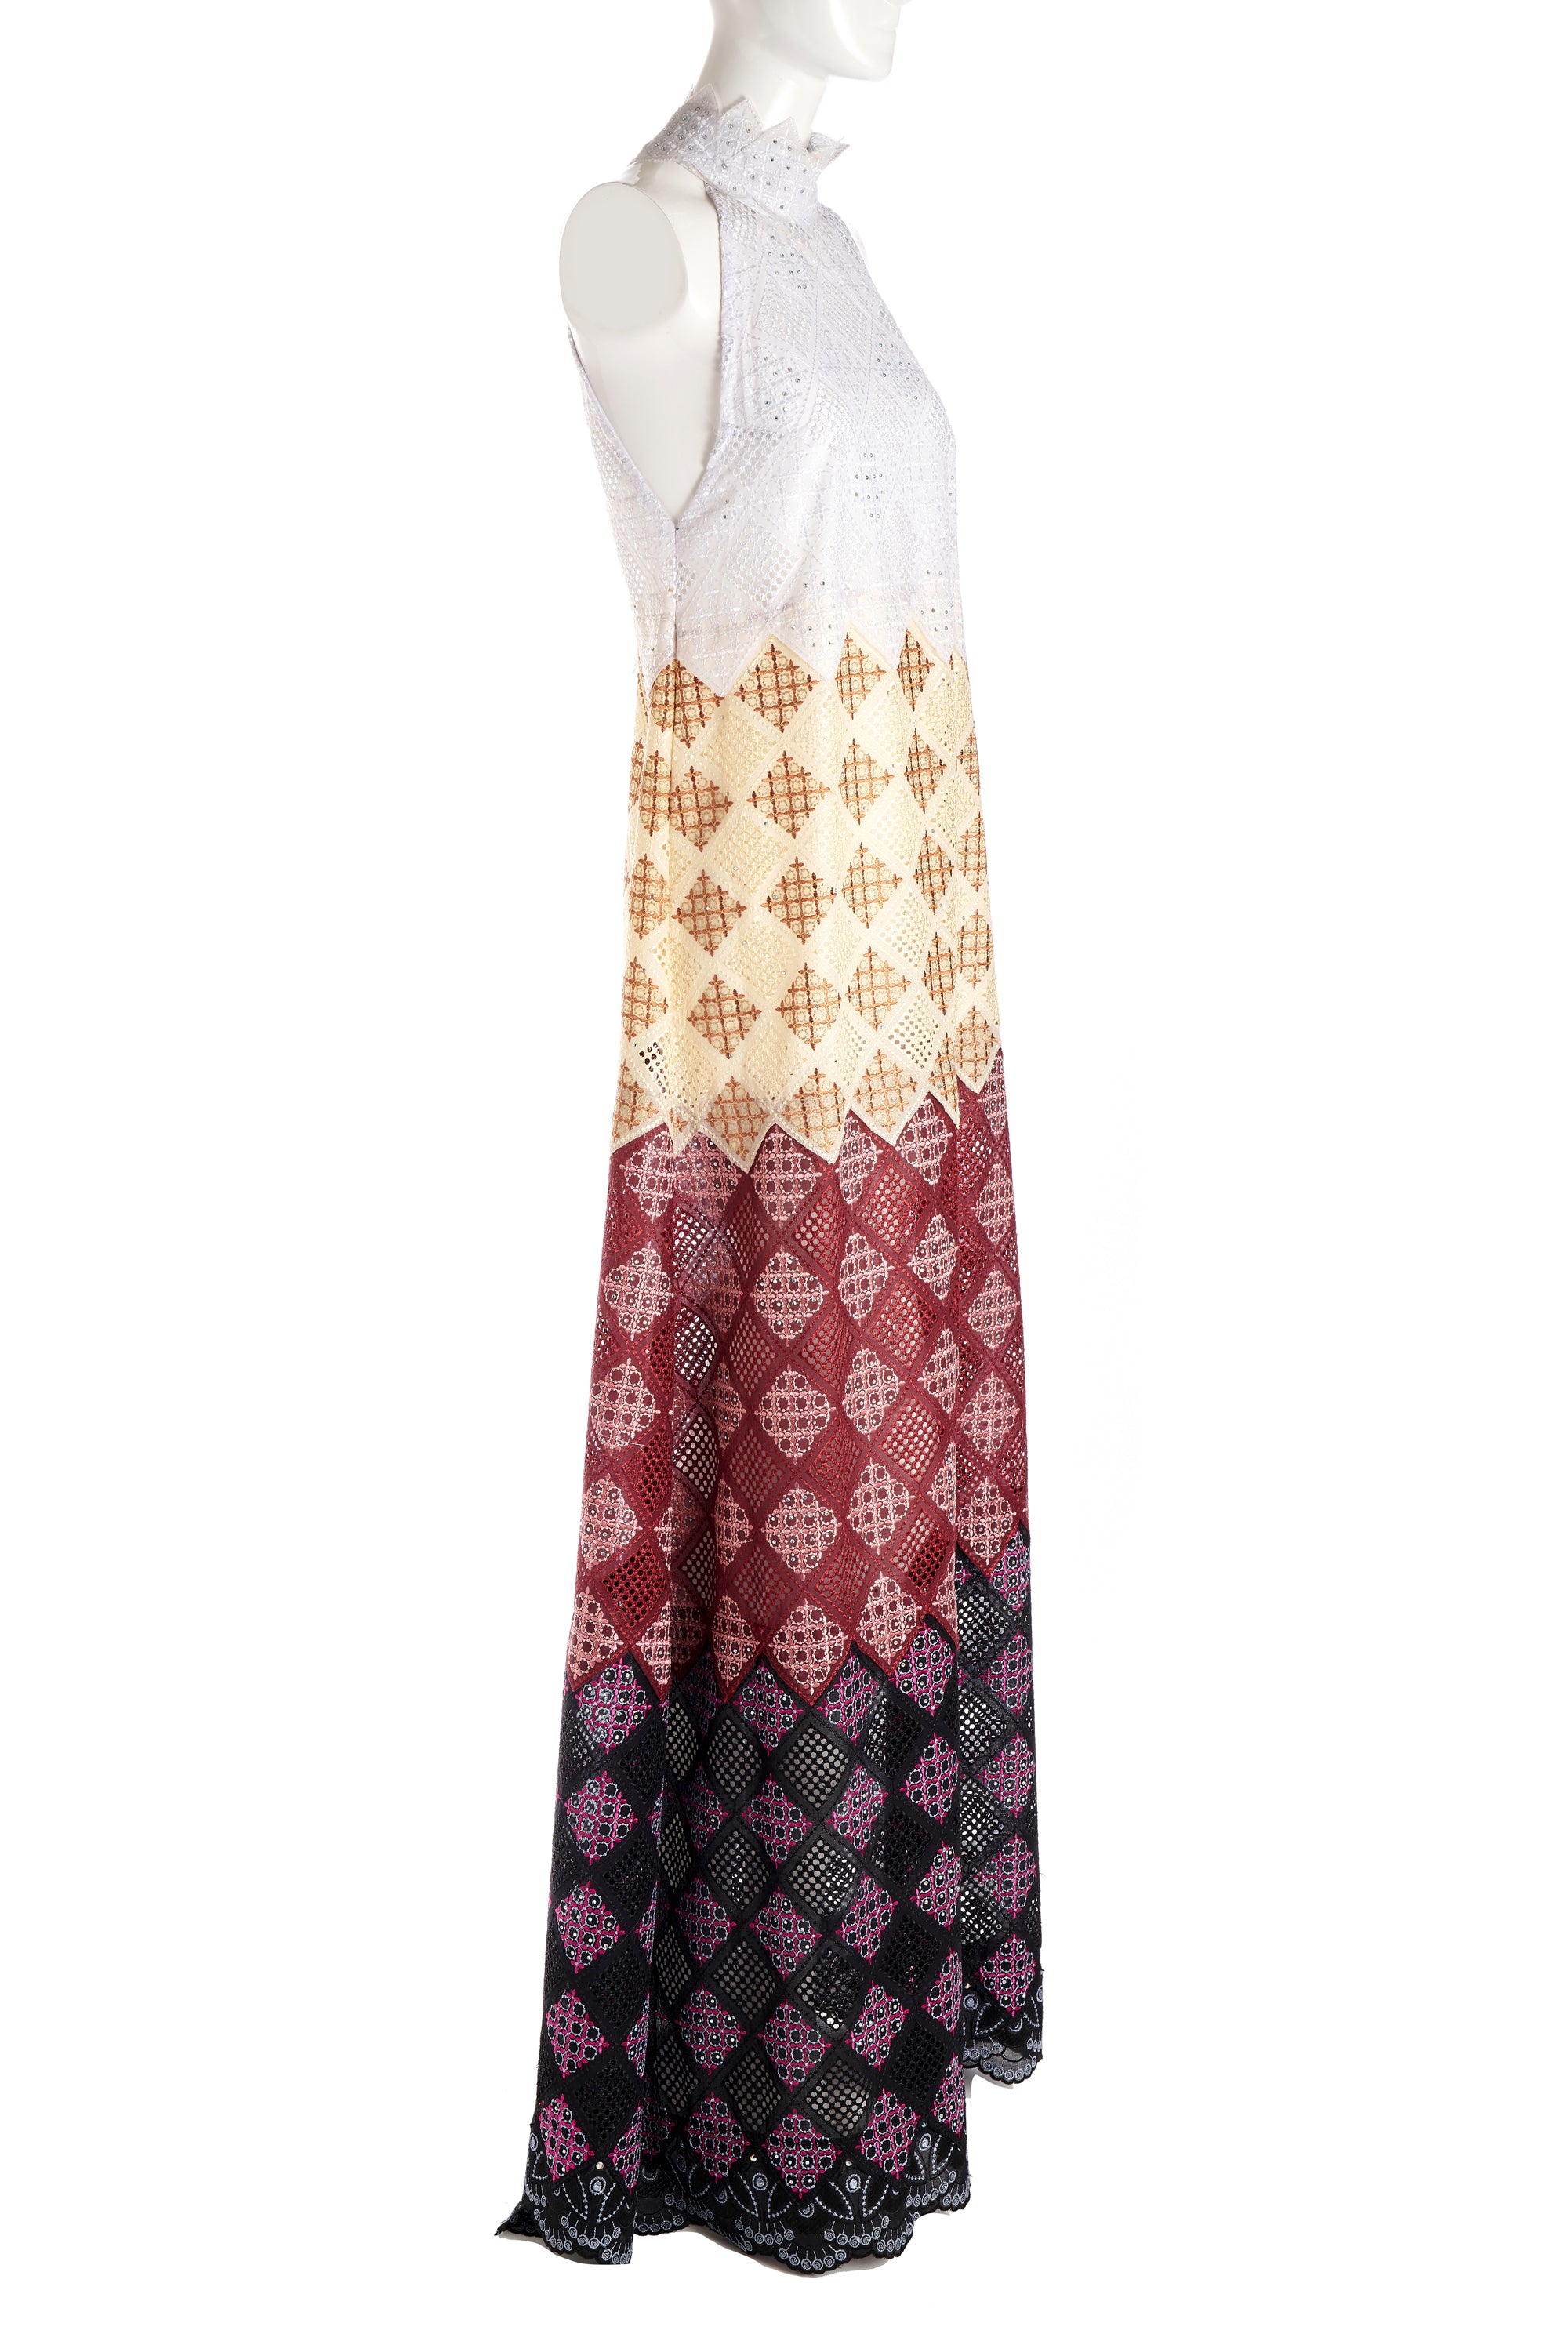 Lisa Folawiyo "Vintage" Lace Maxi Dress NWT Sz 10